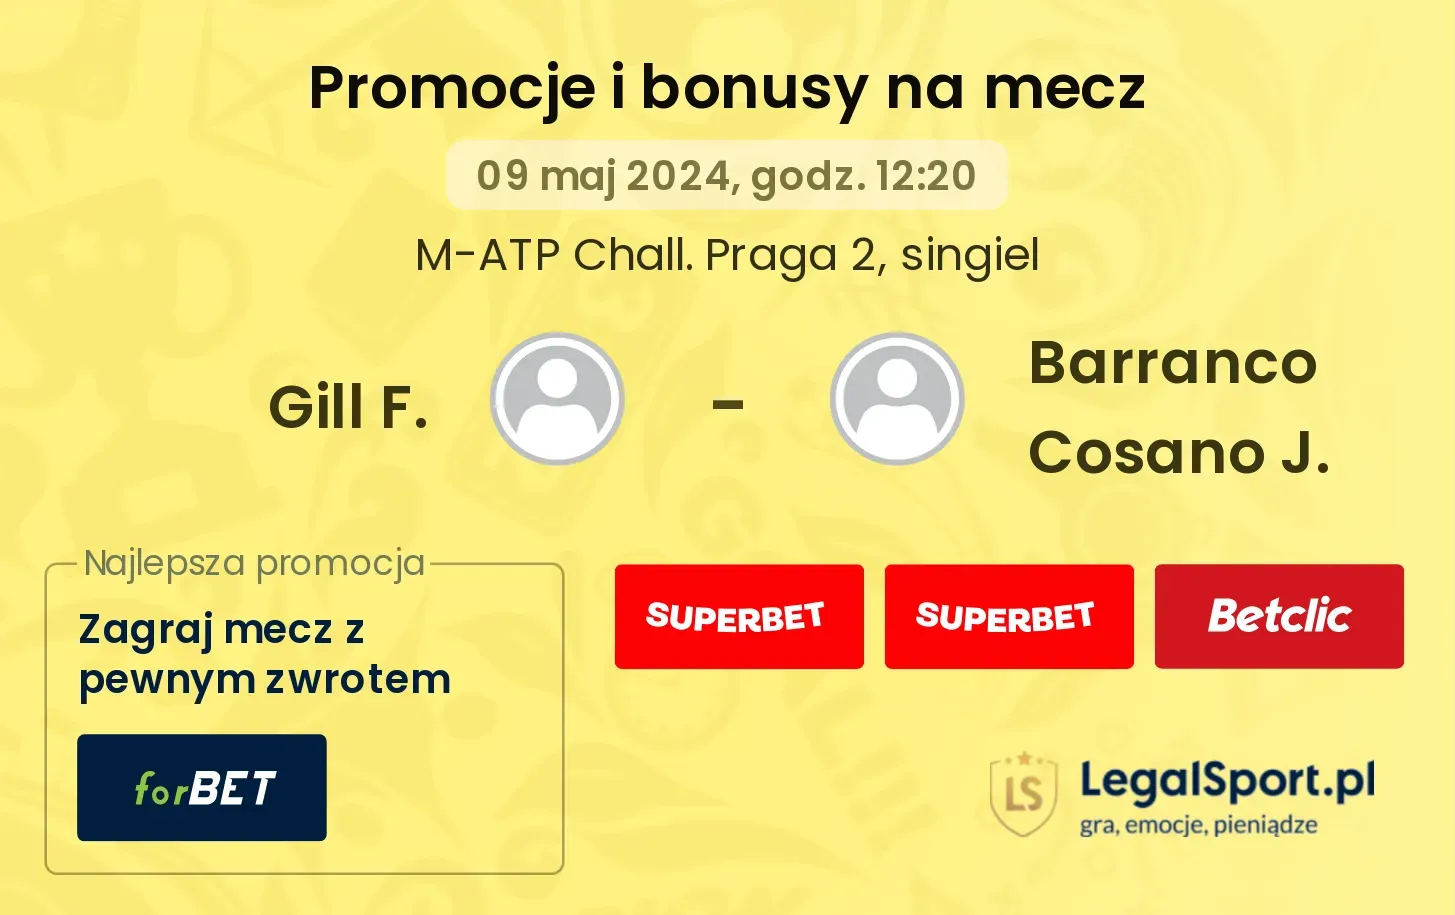 Gill F. - Barranco Cosano J. promocje bonusy na mecz